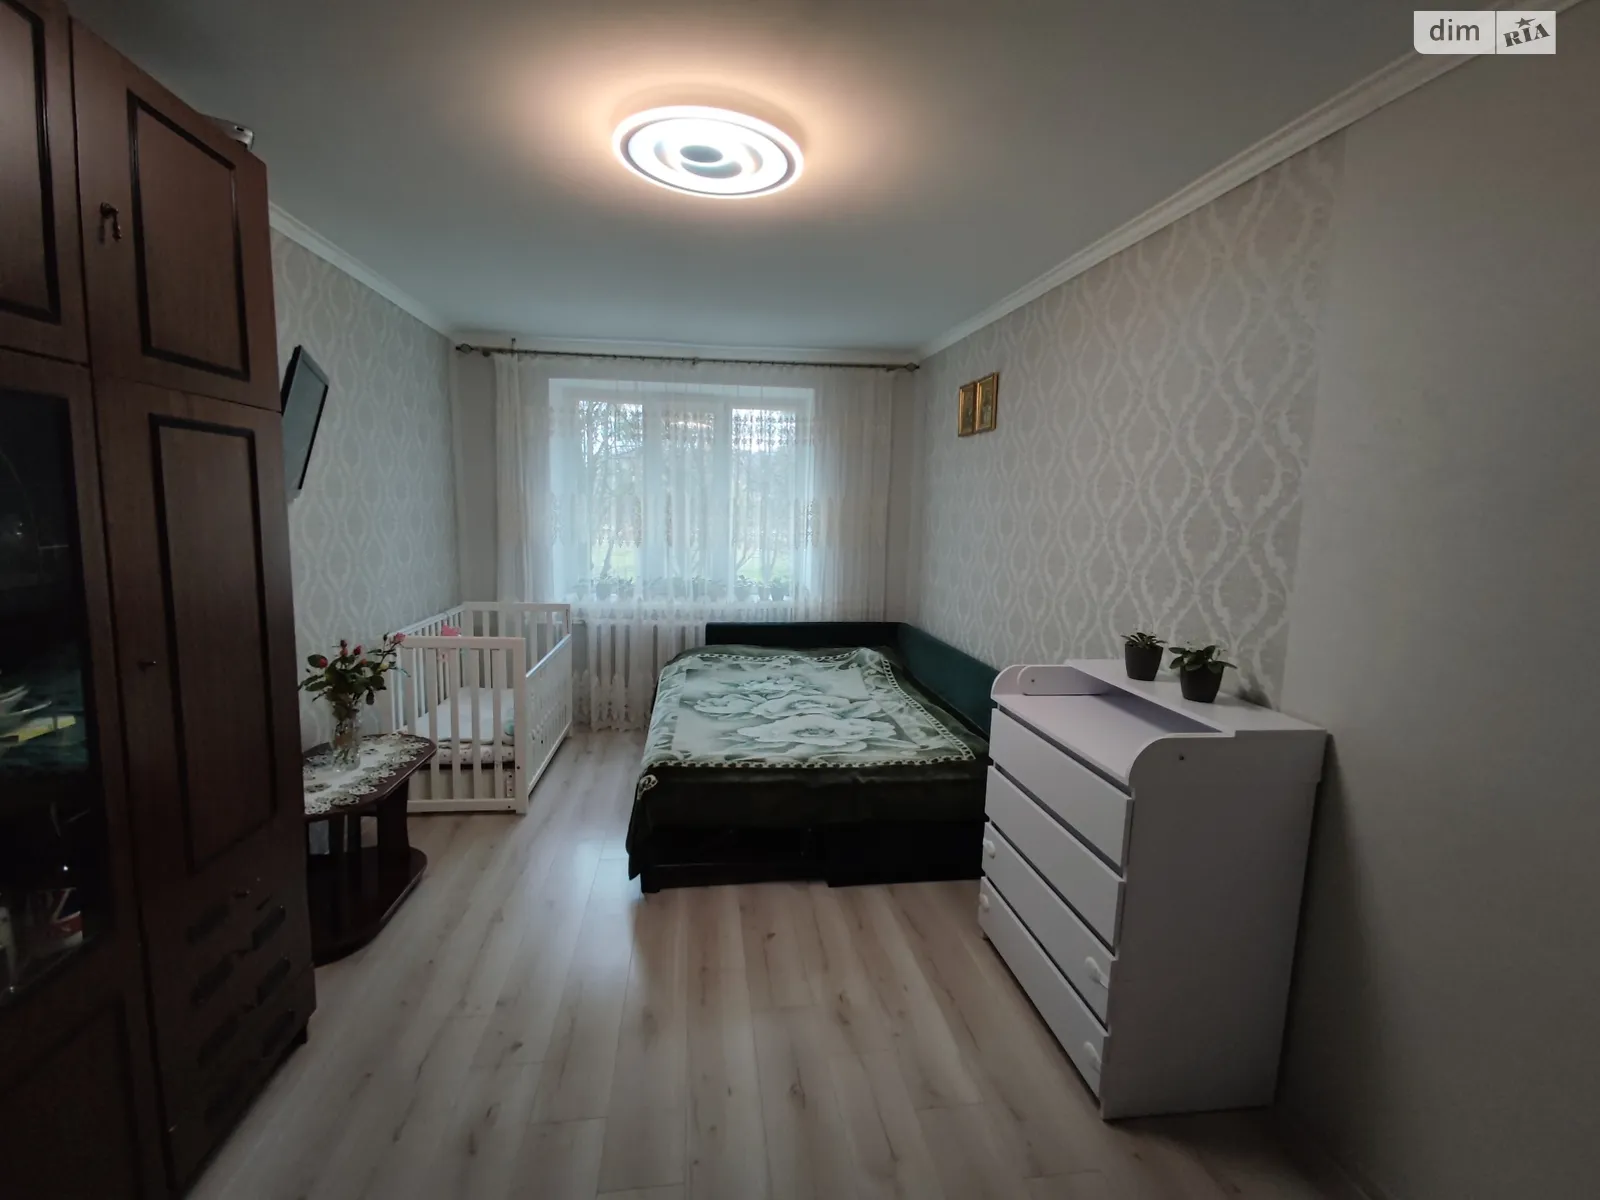 Продается комната 32.4 кв. м в Ровно, цена: 22500 $